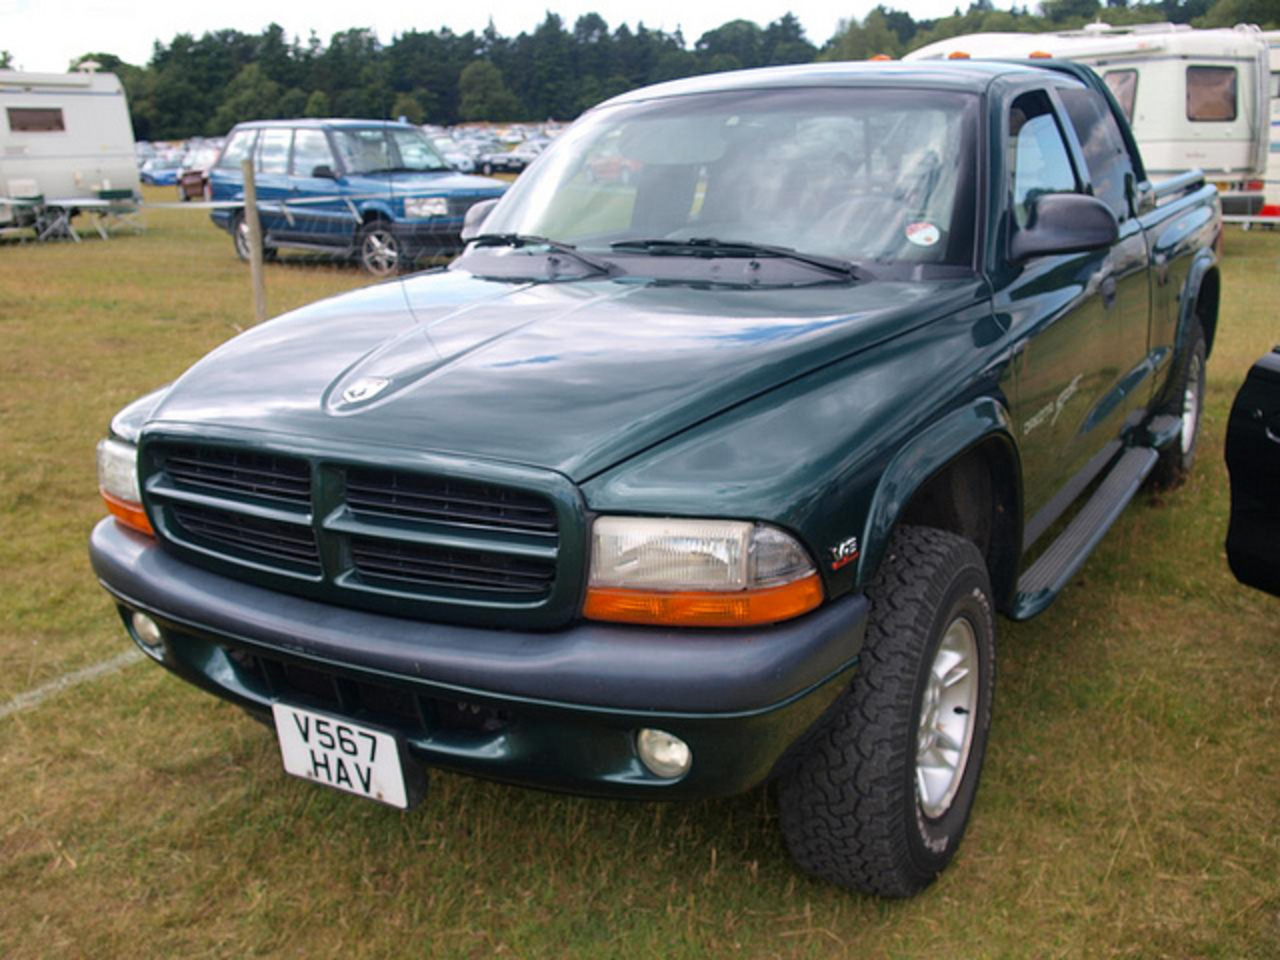 Dodge Dakota Pick Up Truck - 1999 | Flickr - Photo Sharing!